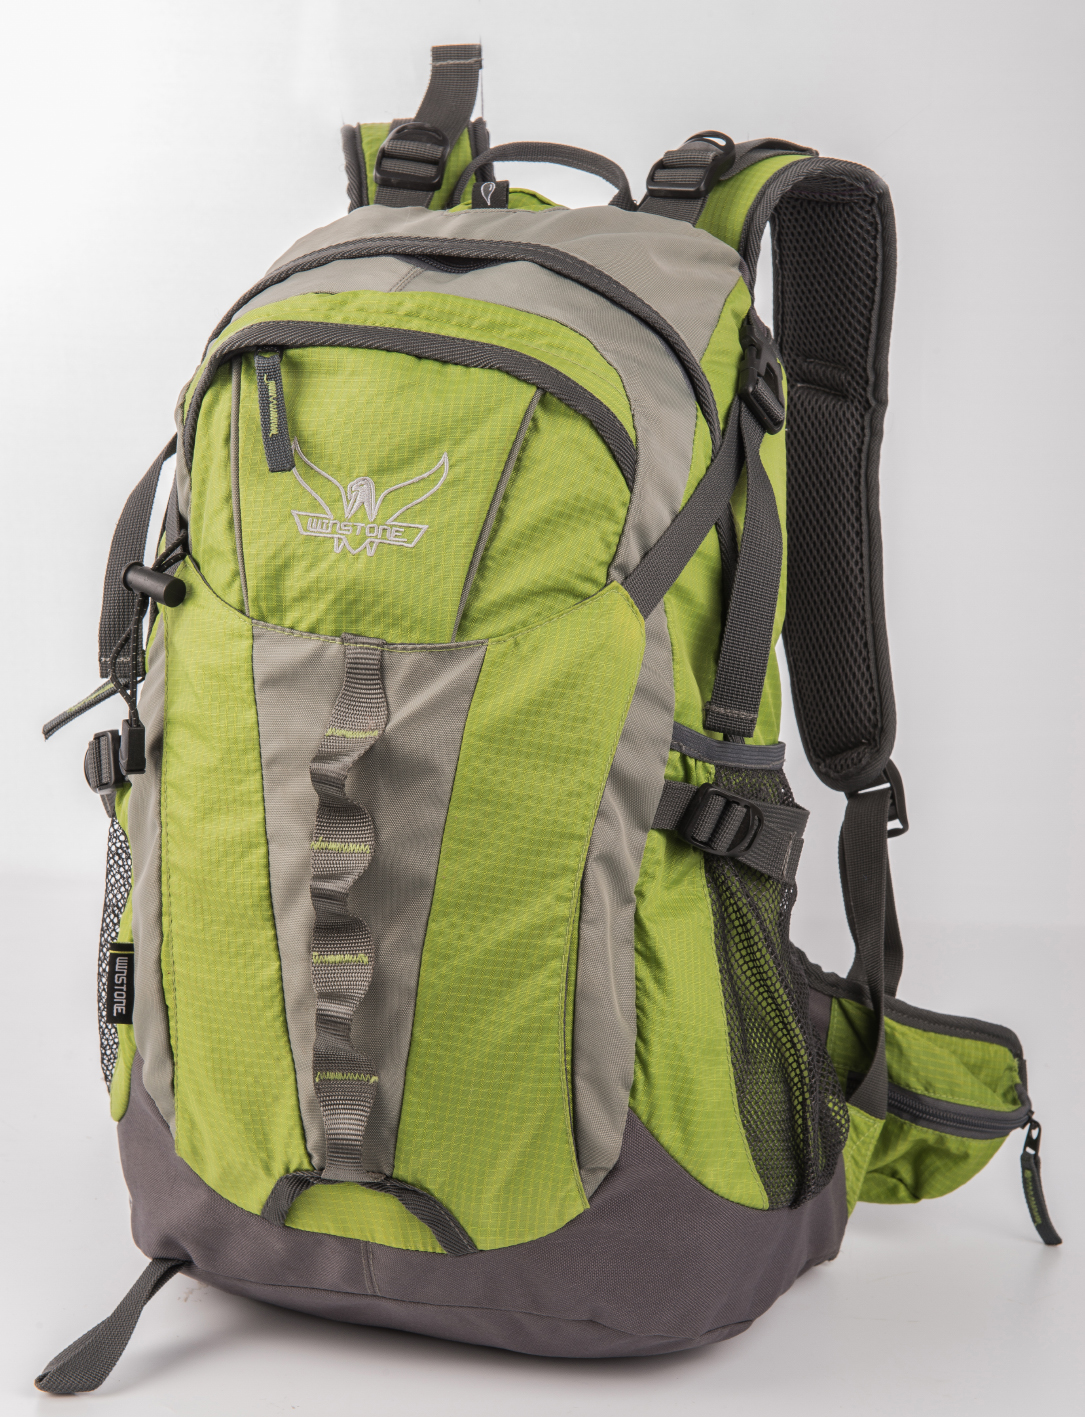 Sport backpack